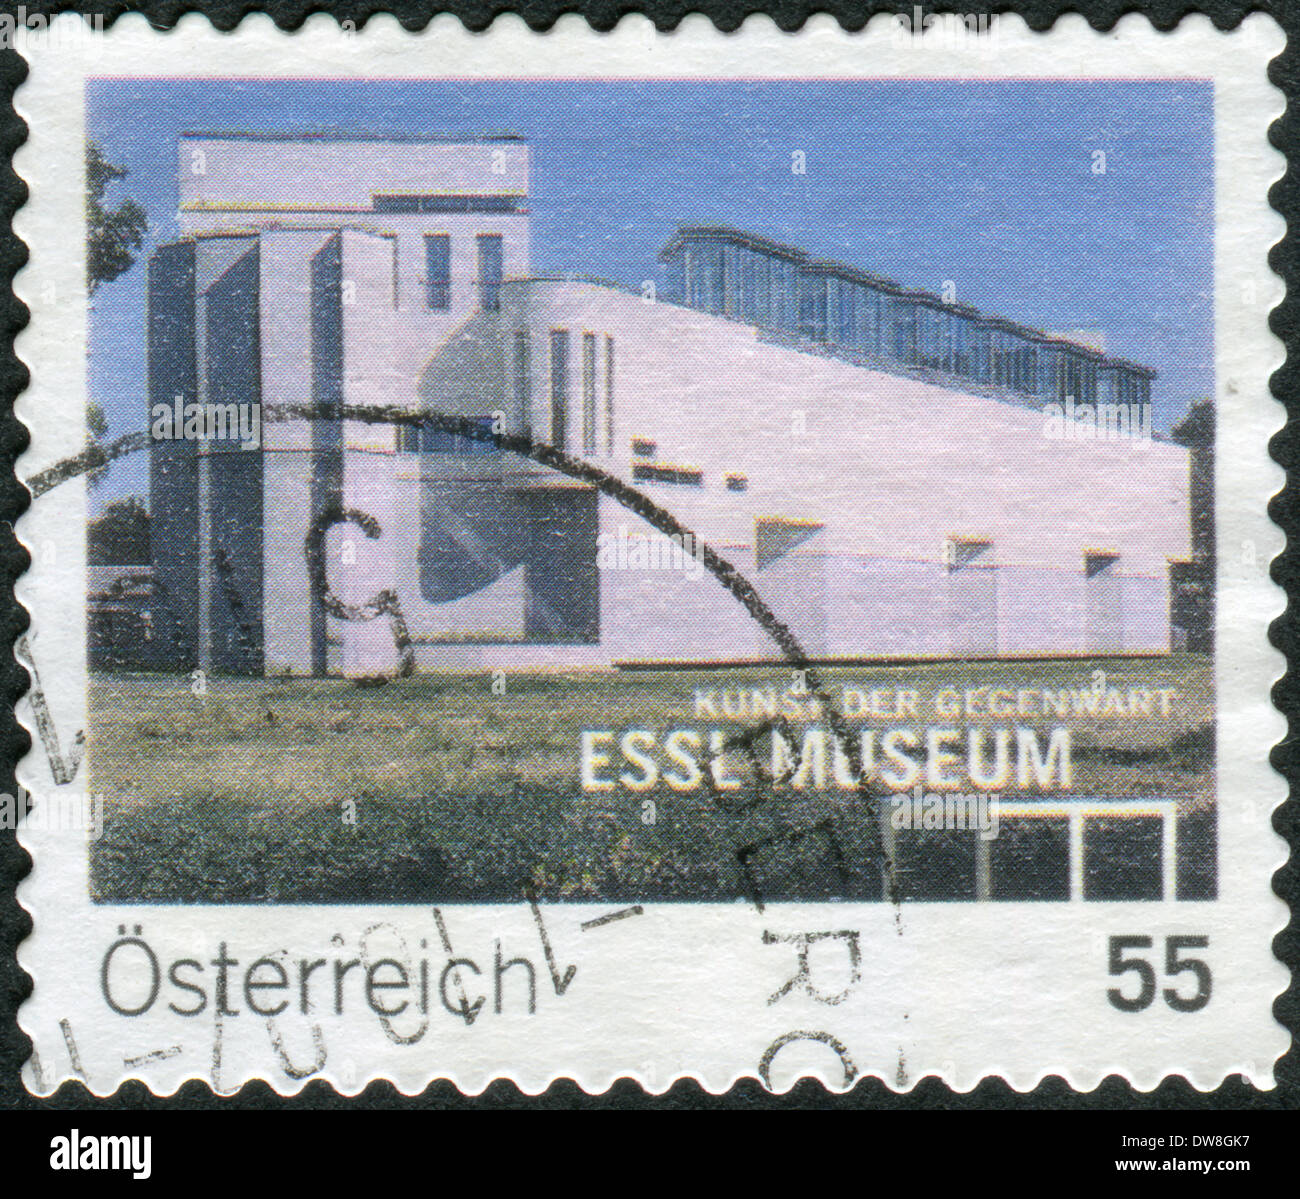 Postage stamp printed in Austria, shows the Museum of Modern Art (Essl Museum Kunst der Gegenwart) Stock Photo